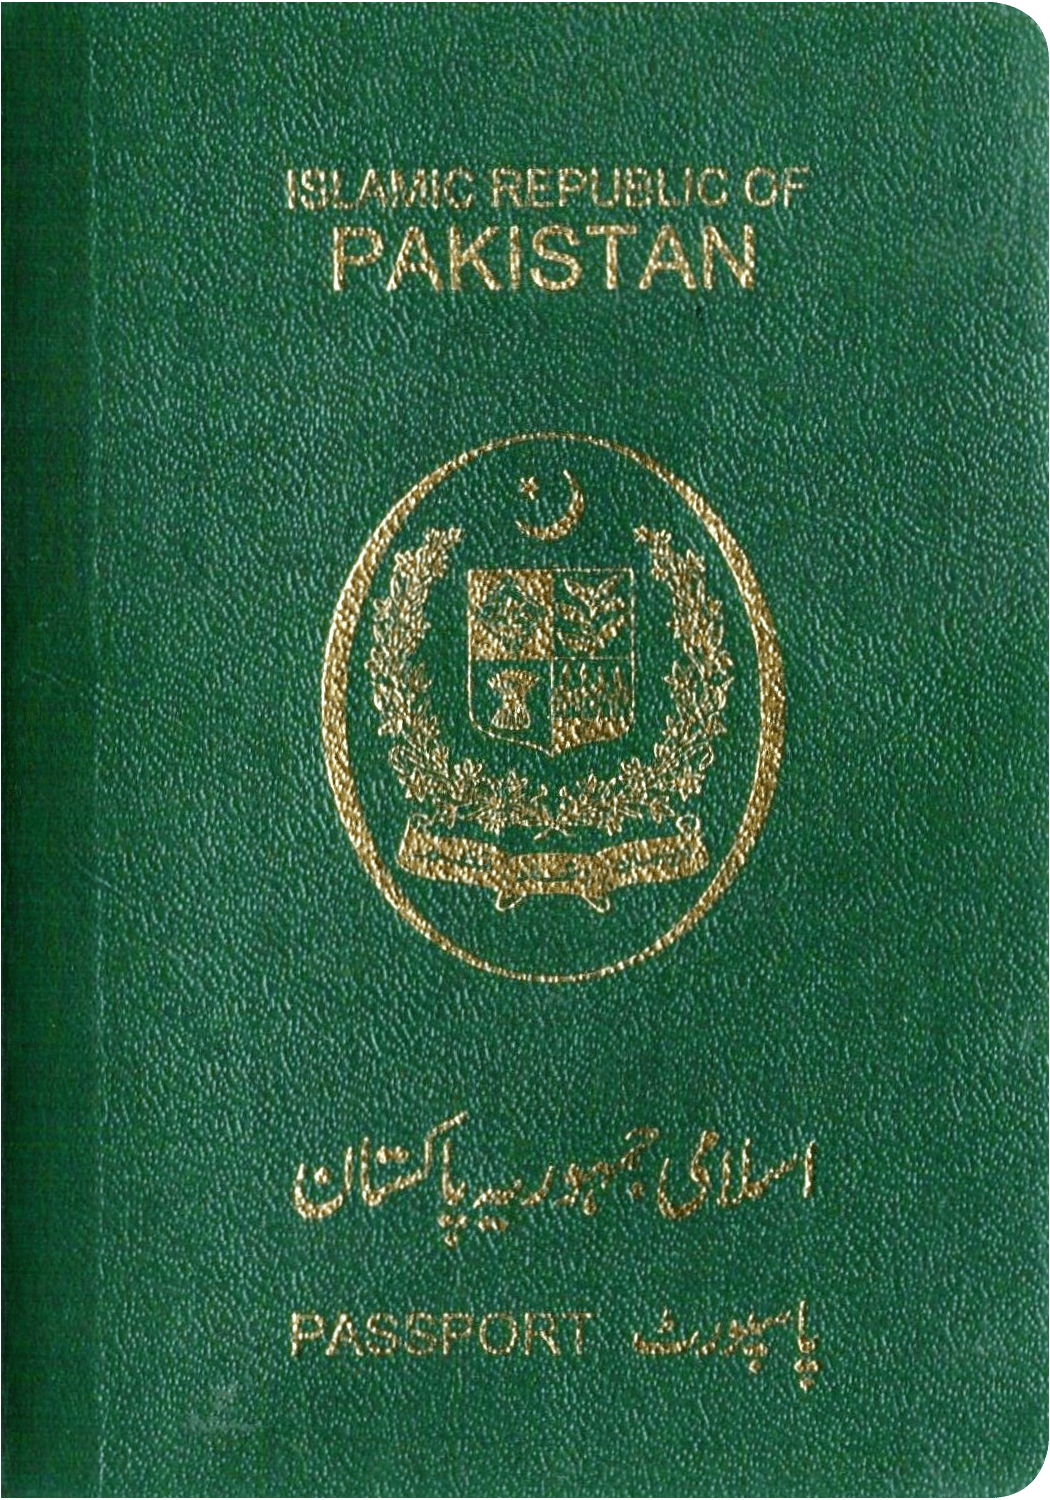 A regular or ordinary Pakistani passport - Front side